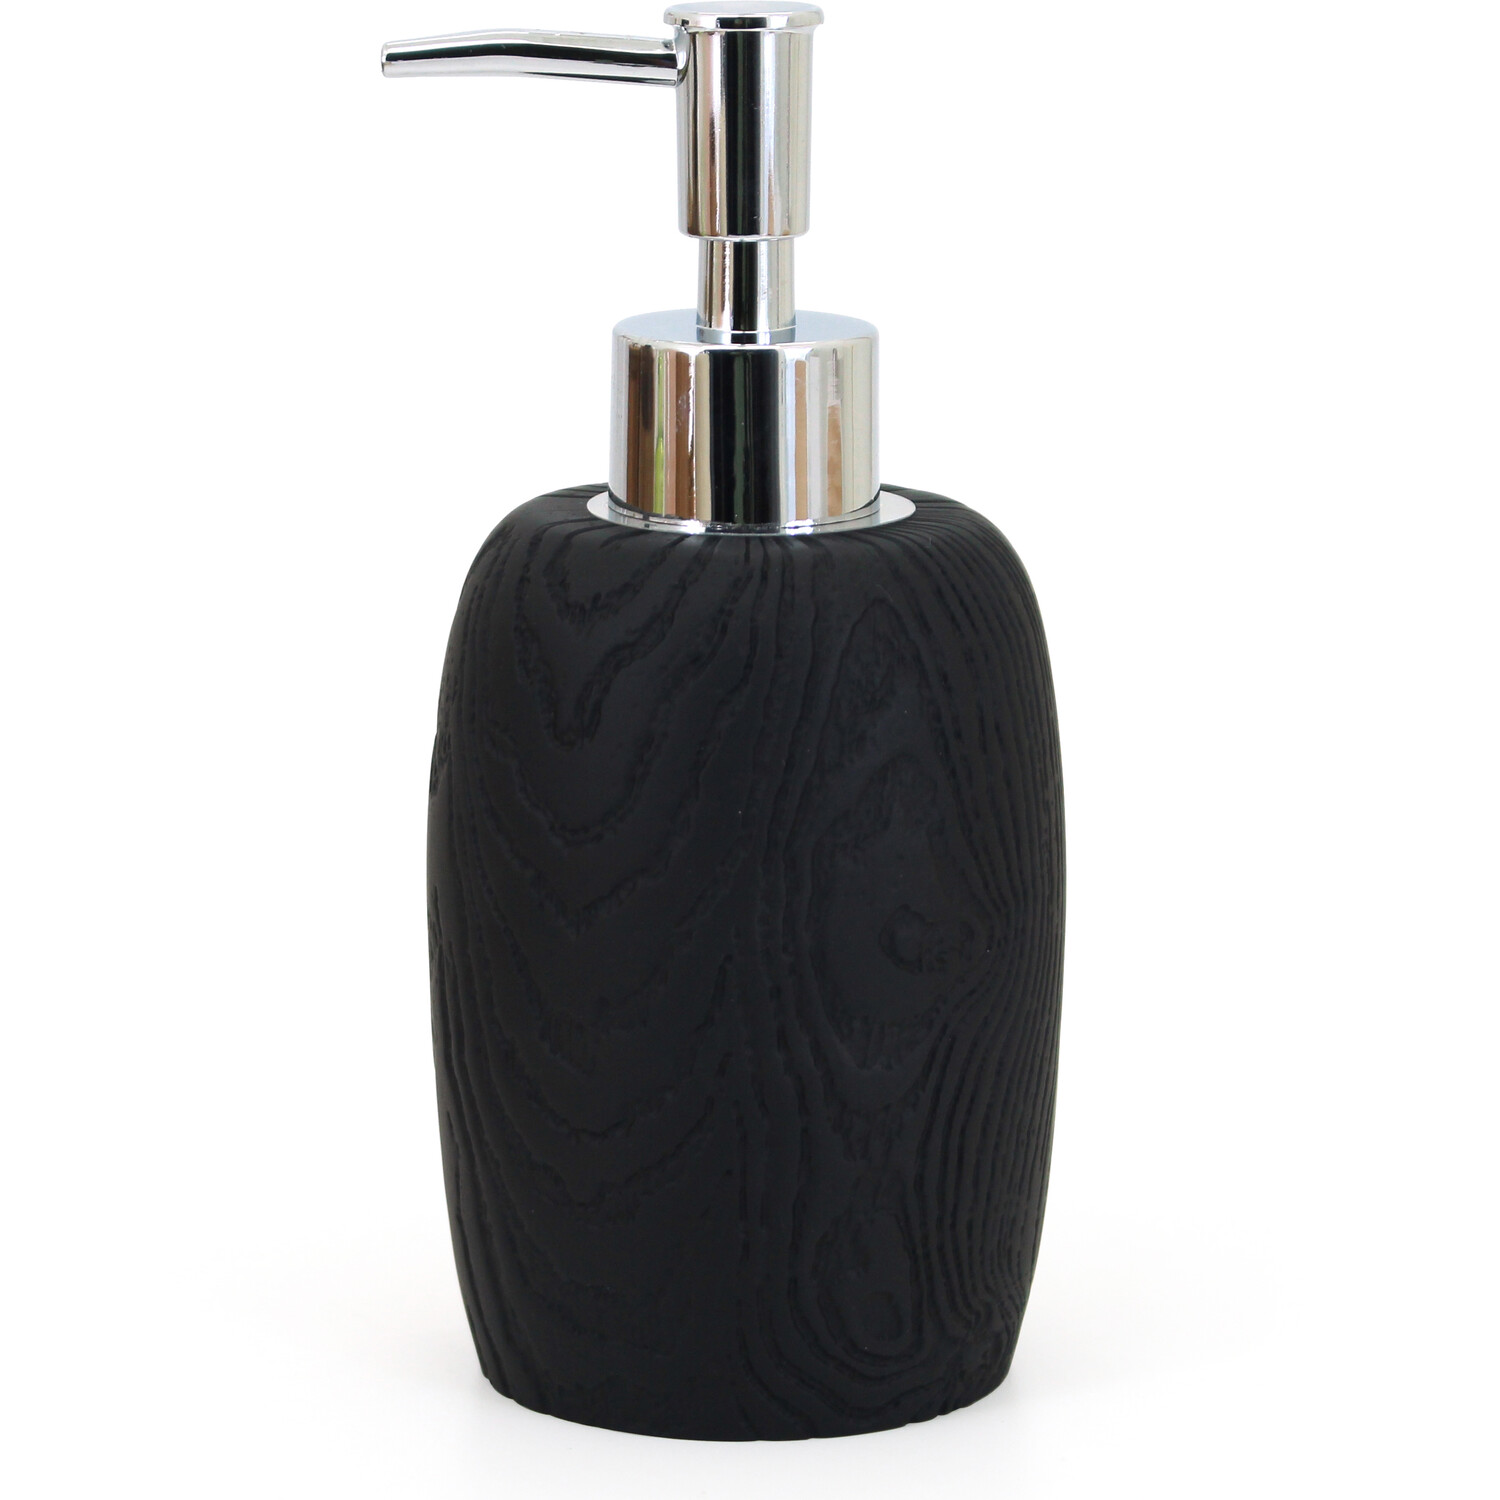 Wood Grain Soap Dispenser - Black Image